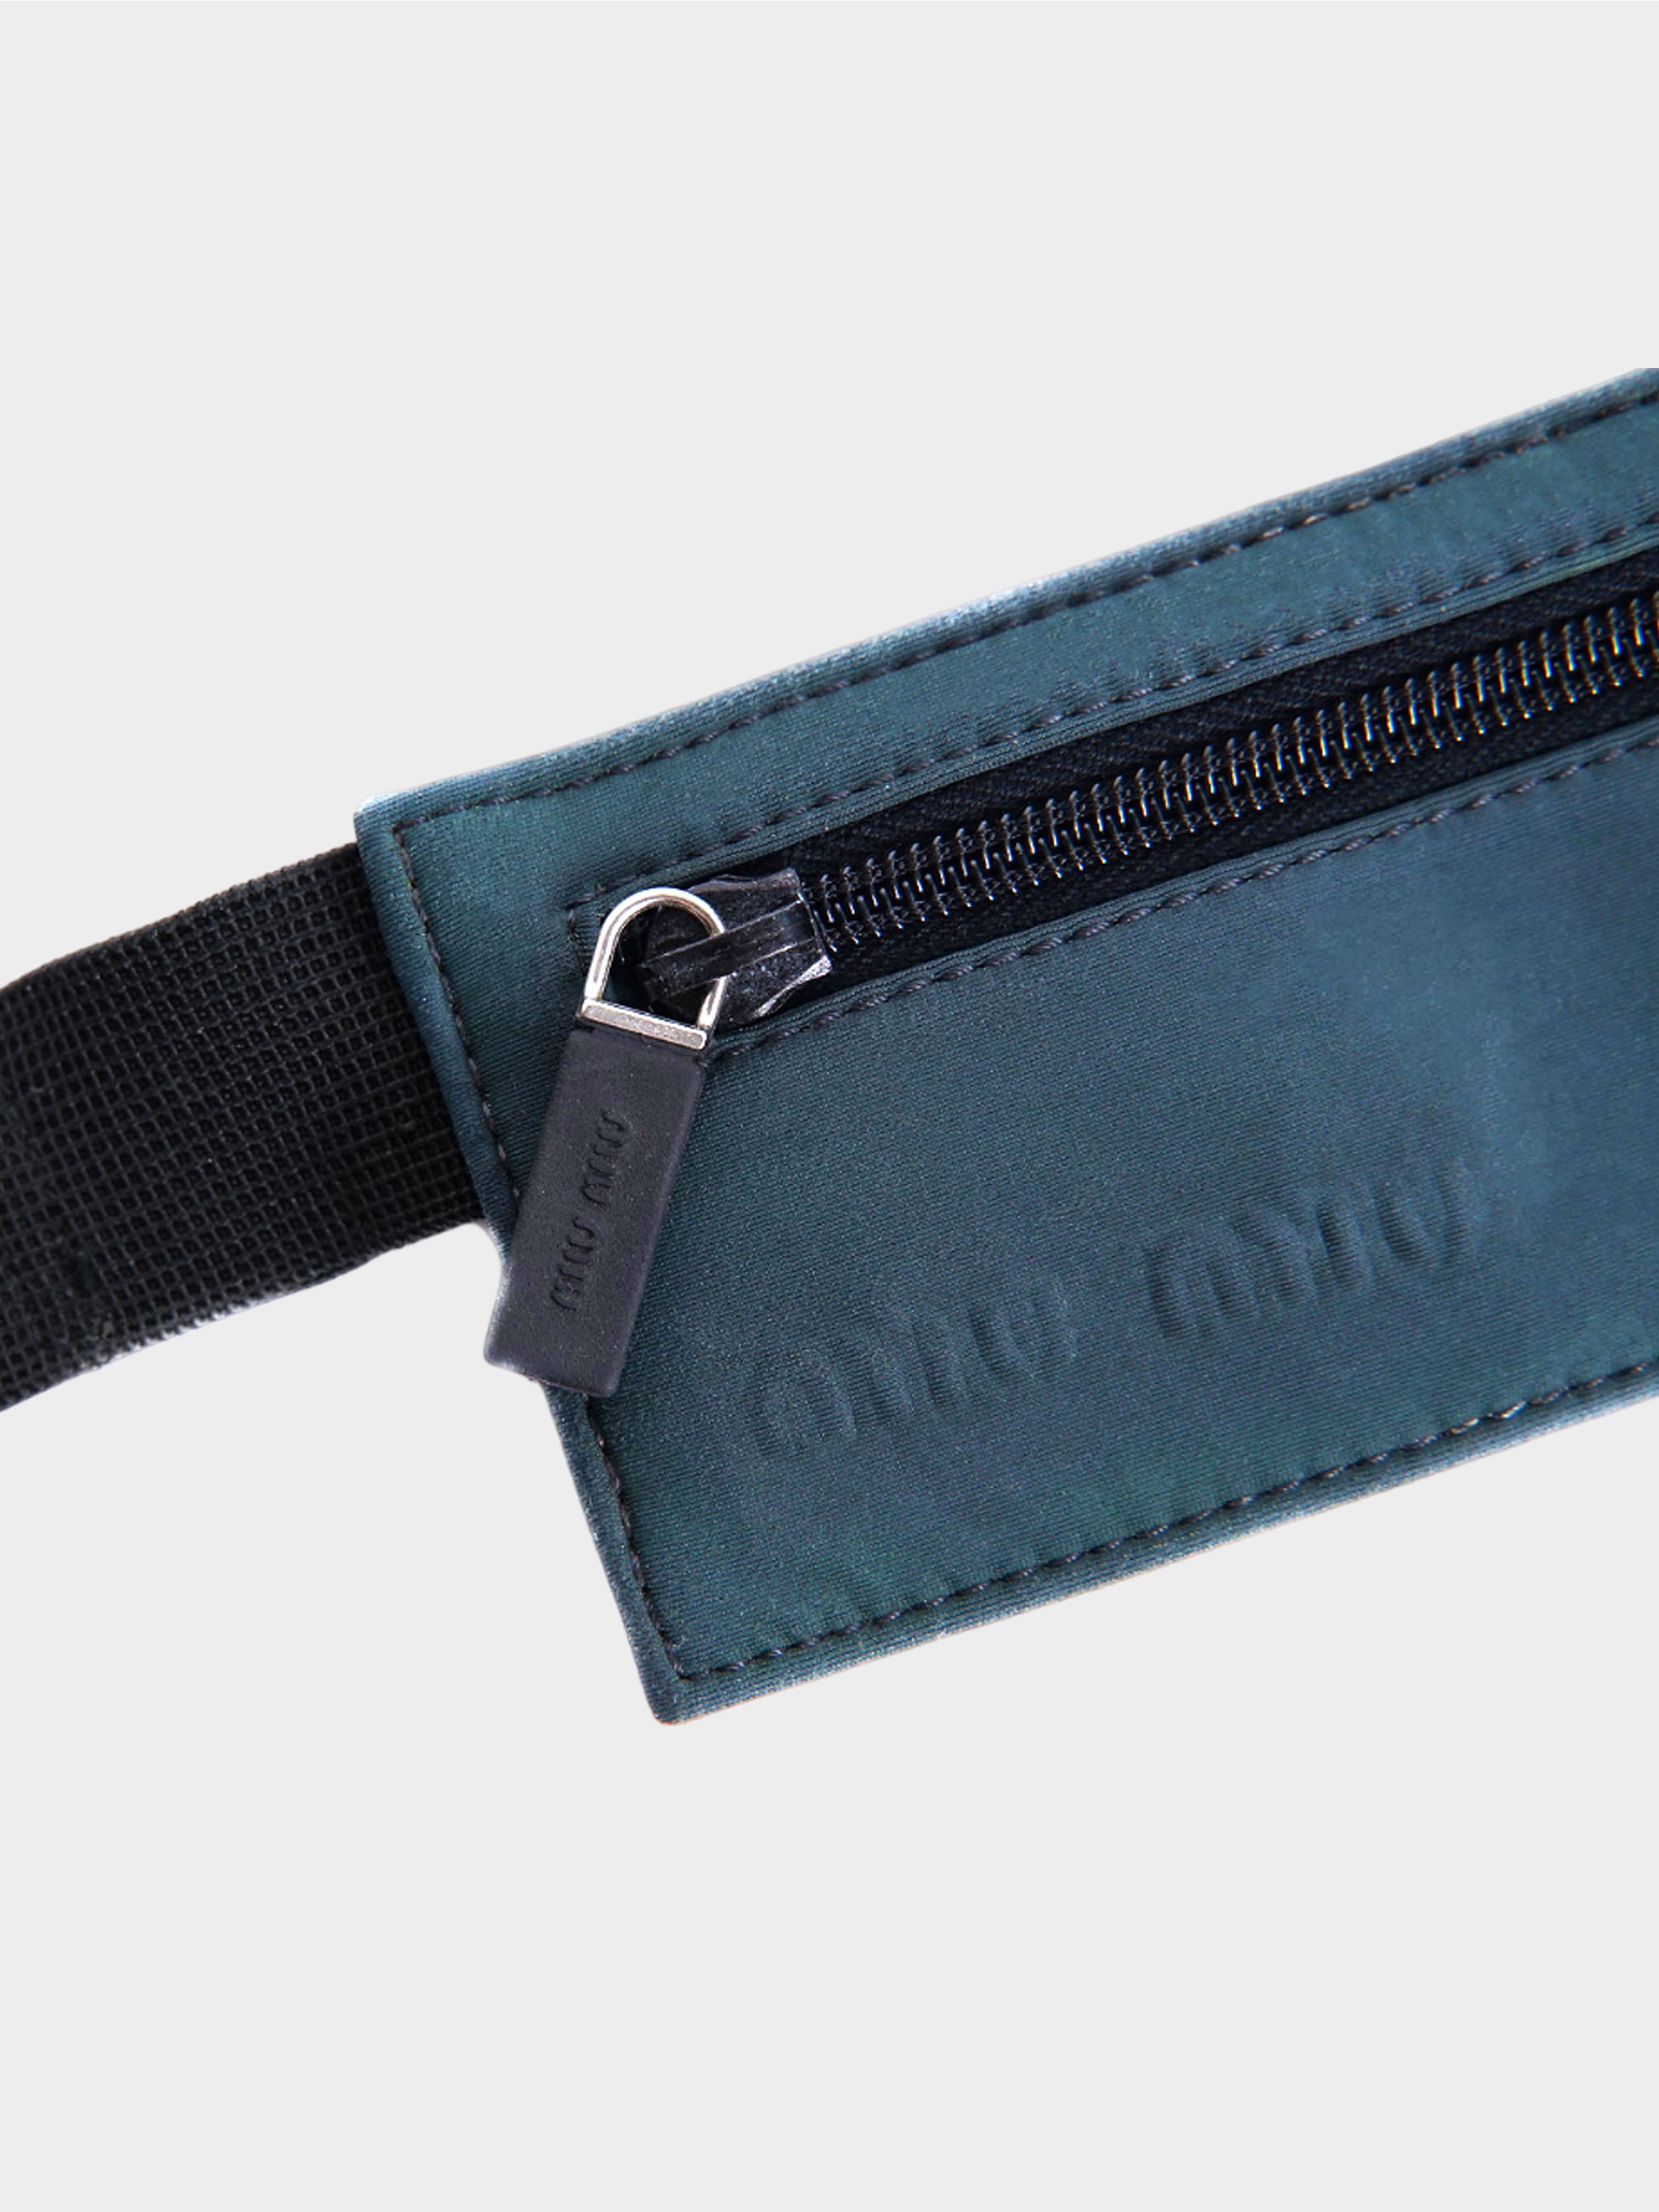 Miu Miu SS 1999 Blue Neoprene Belt Bag